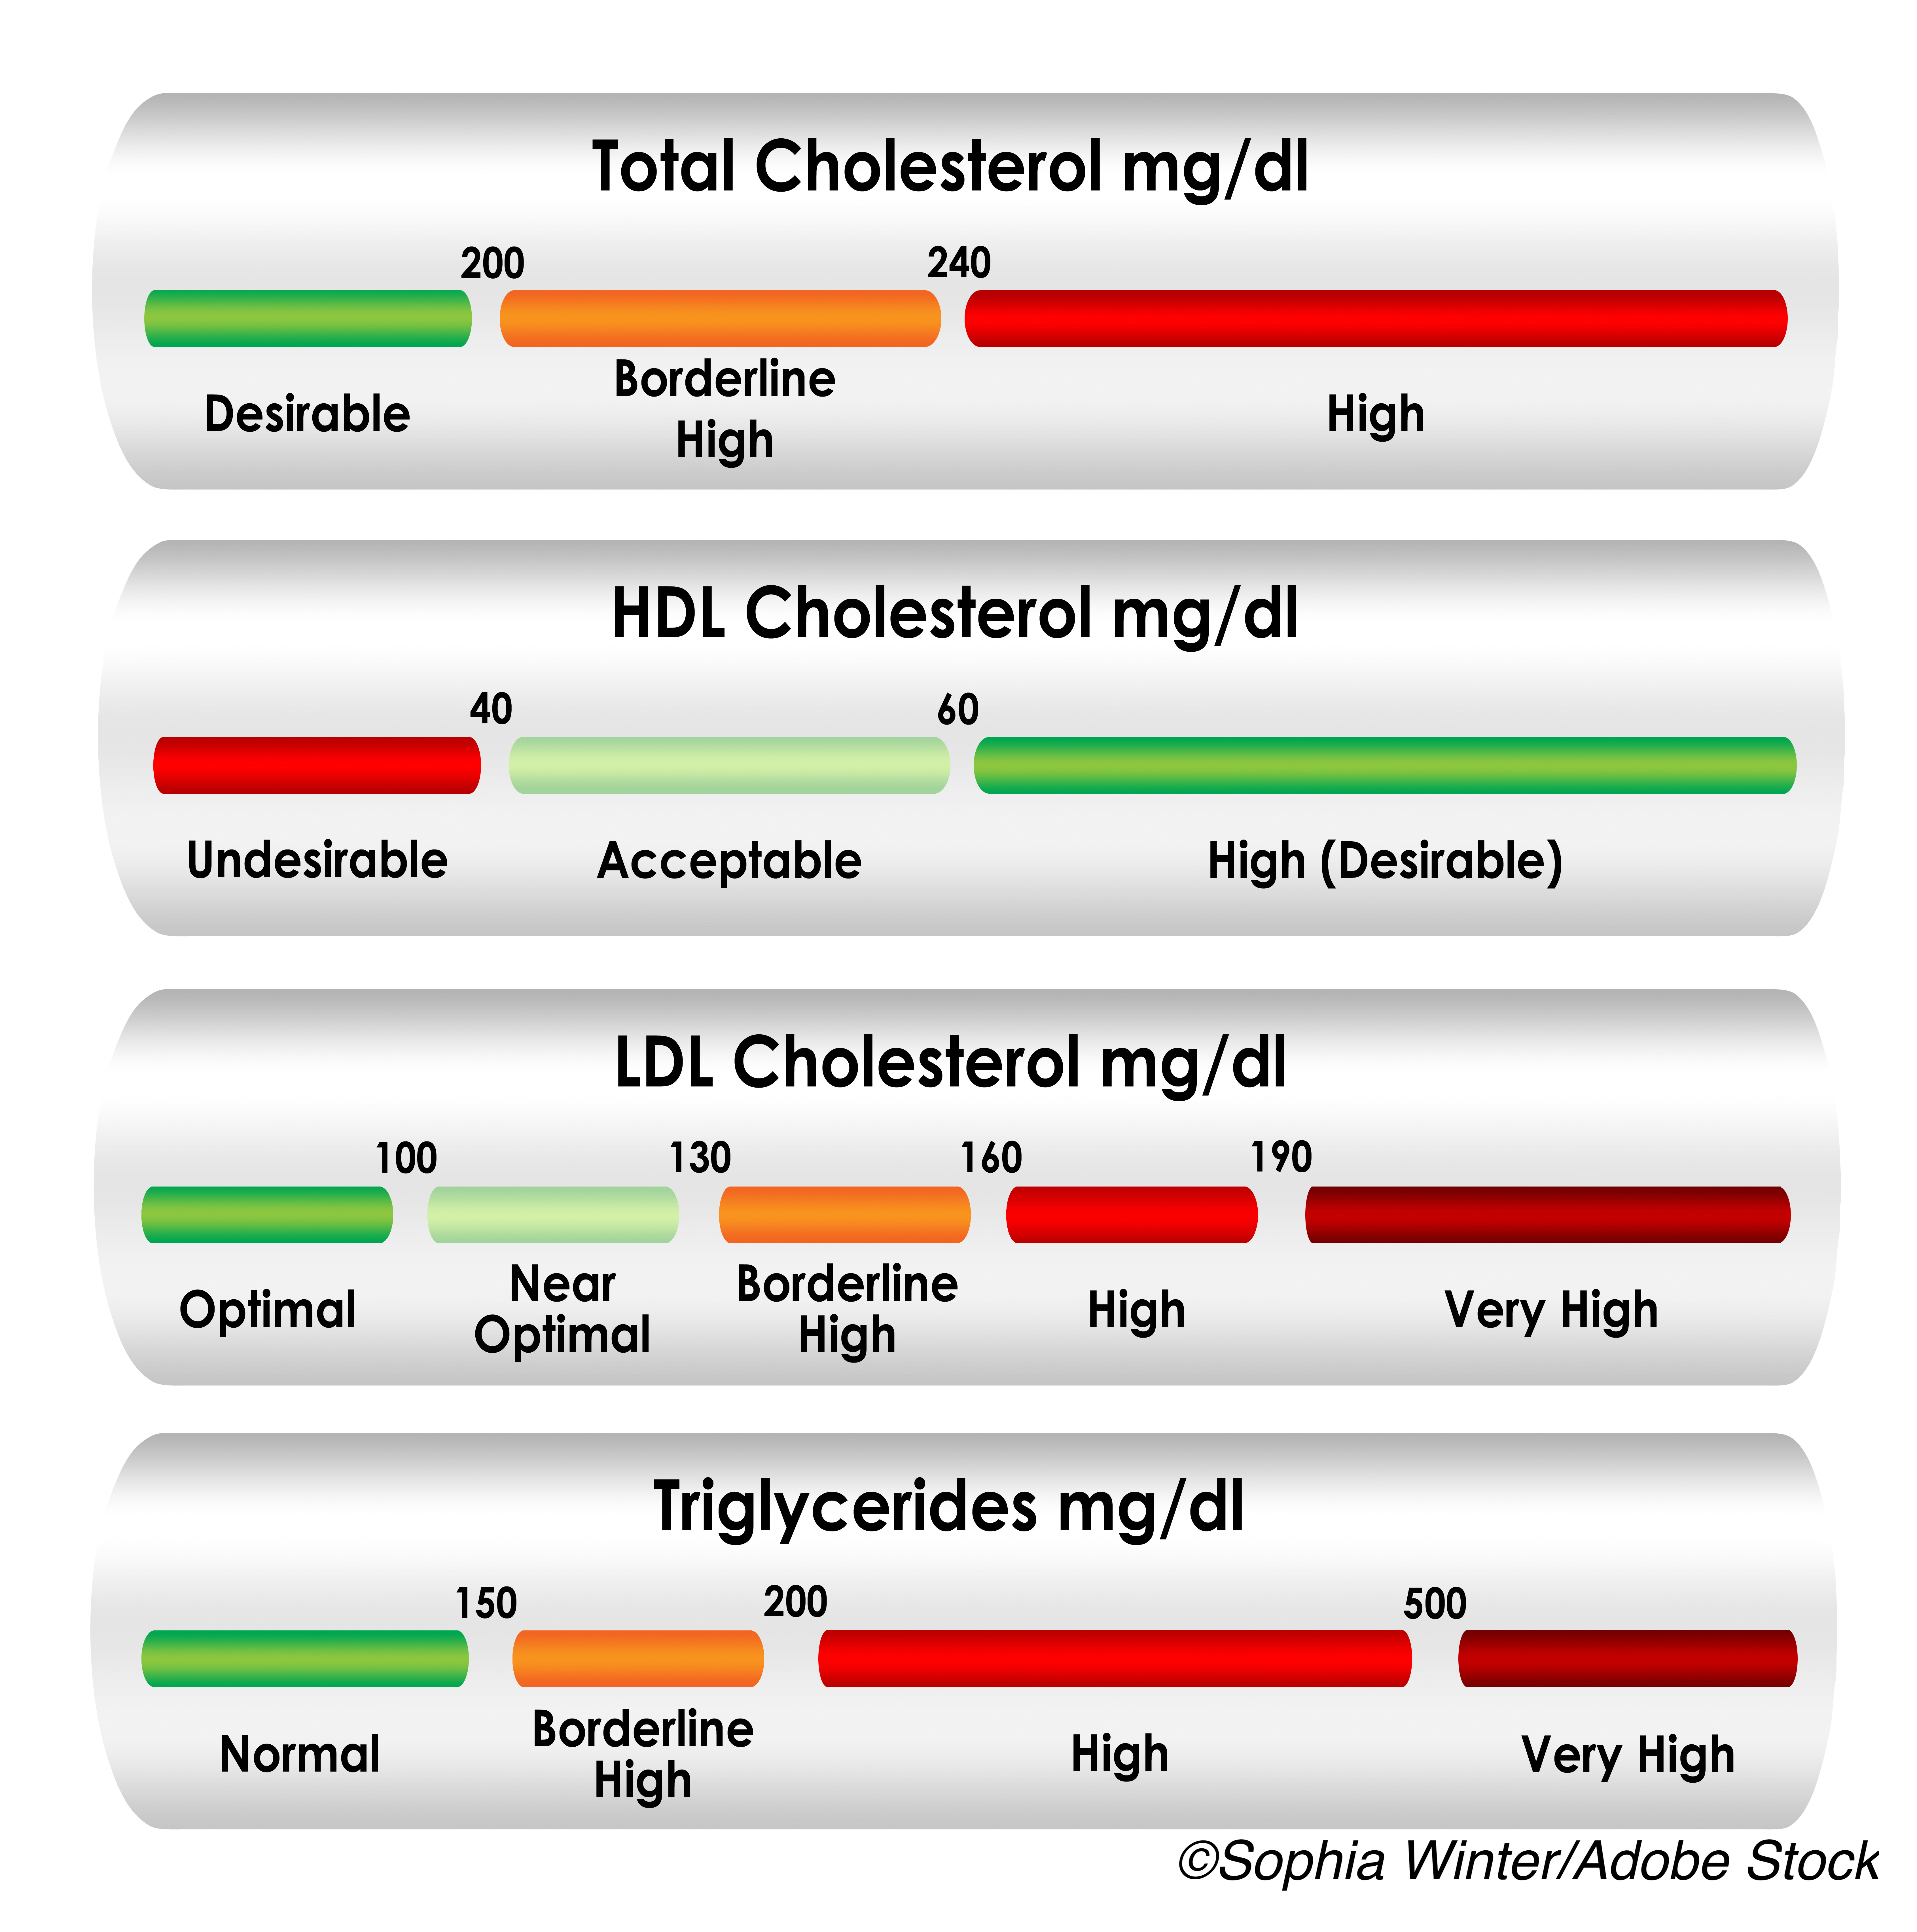 Measuring HDL Anti-Inflammatory Capacity Better Predicts CVD Risk